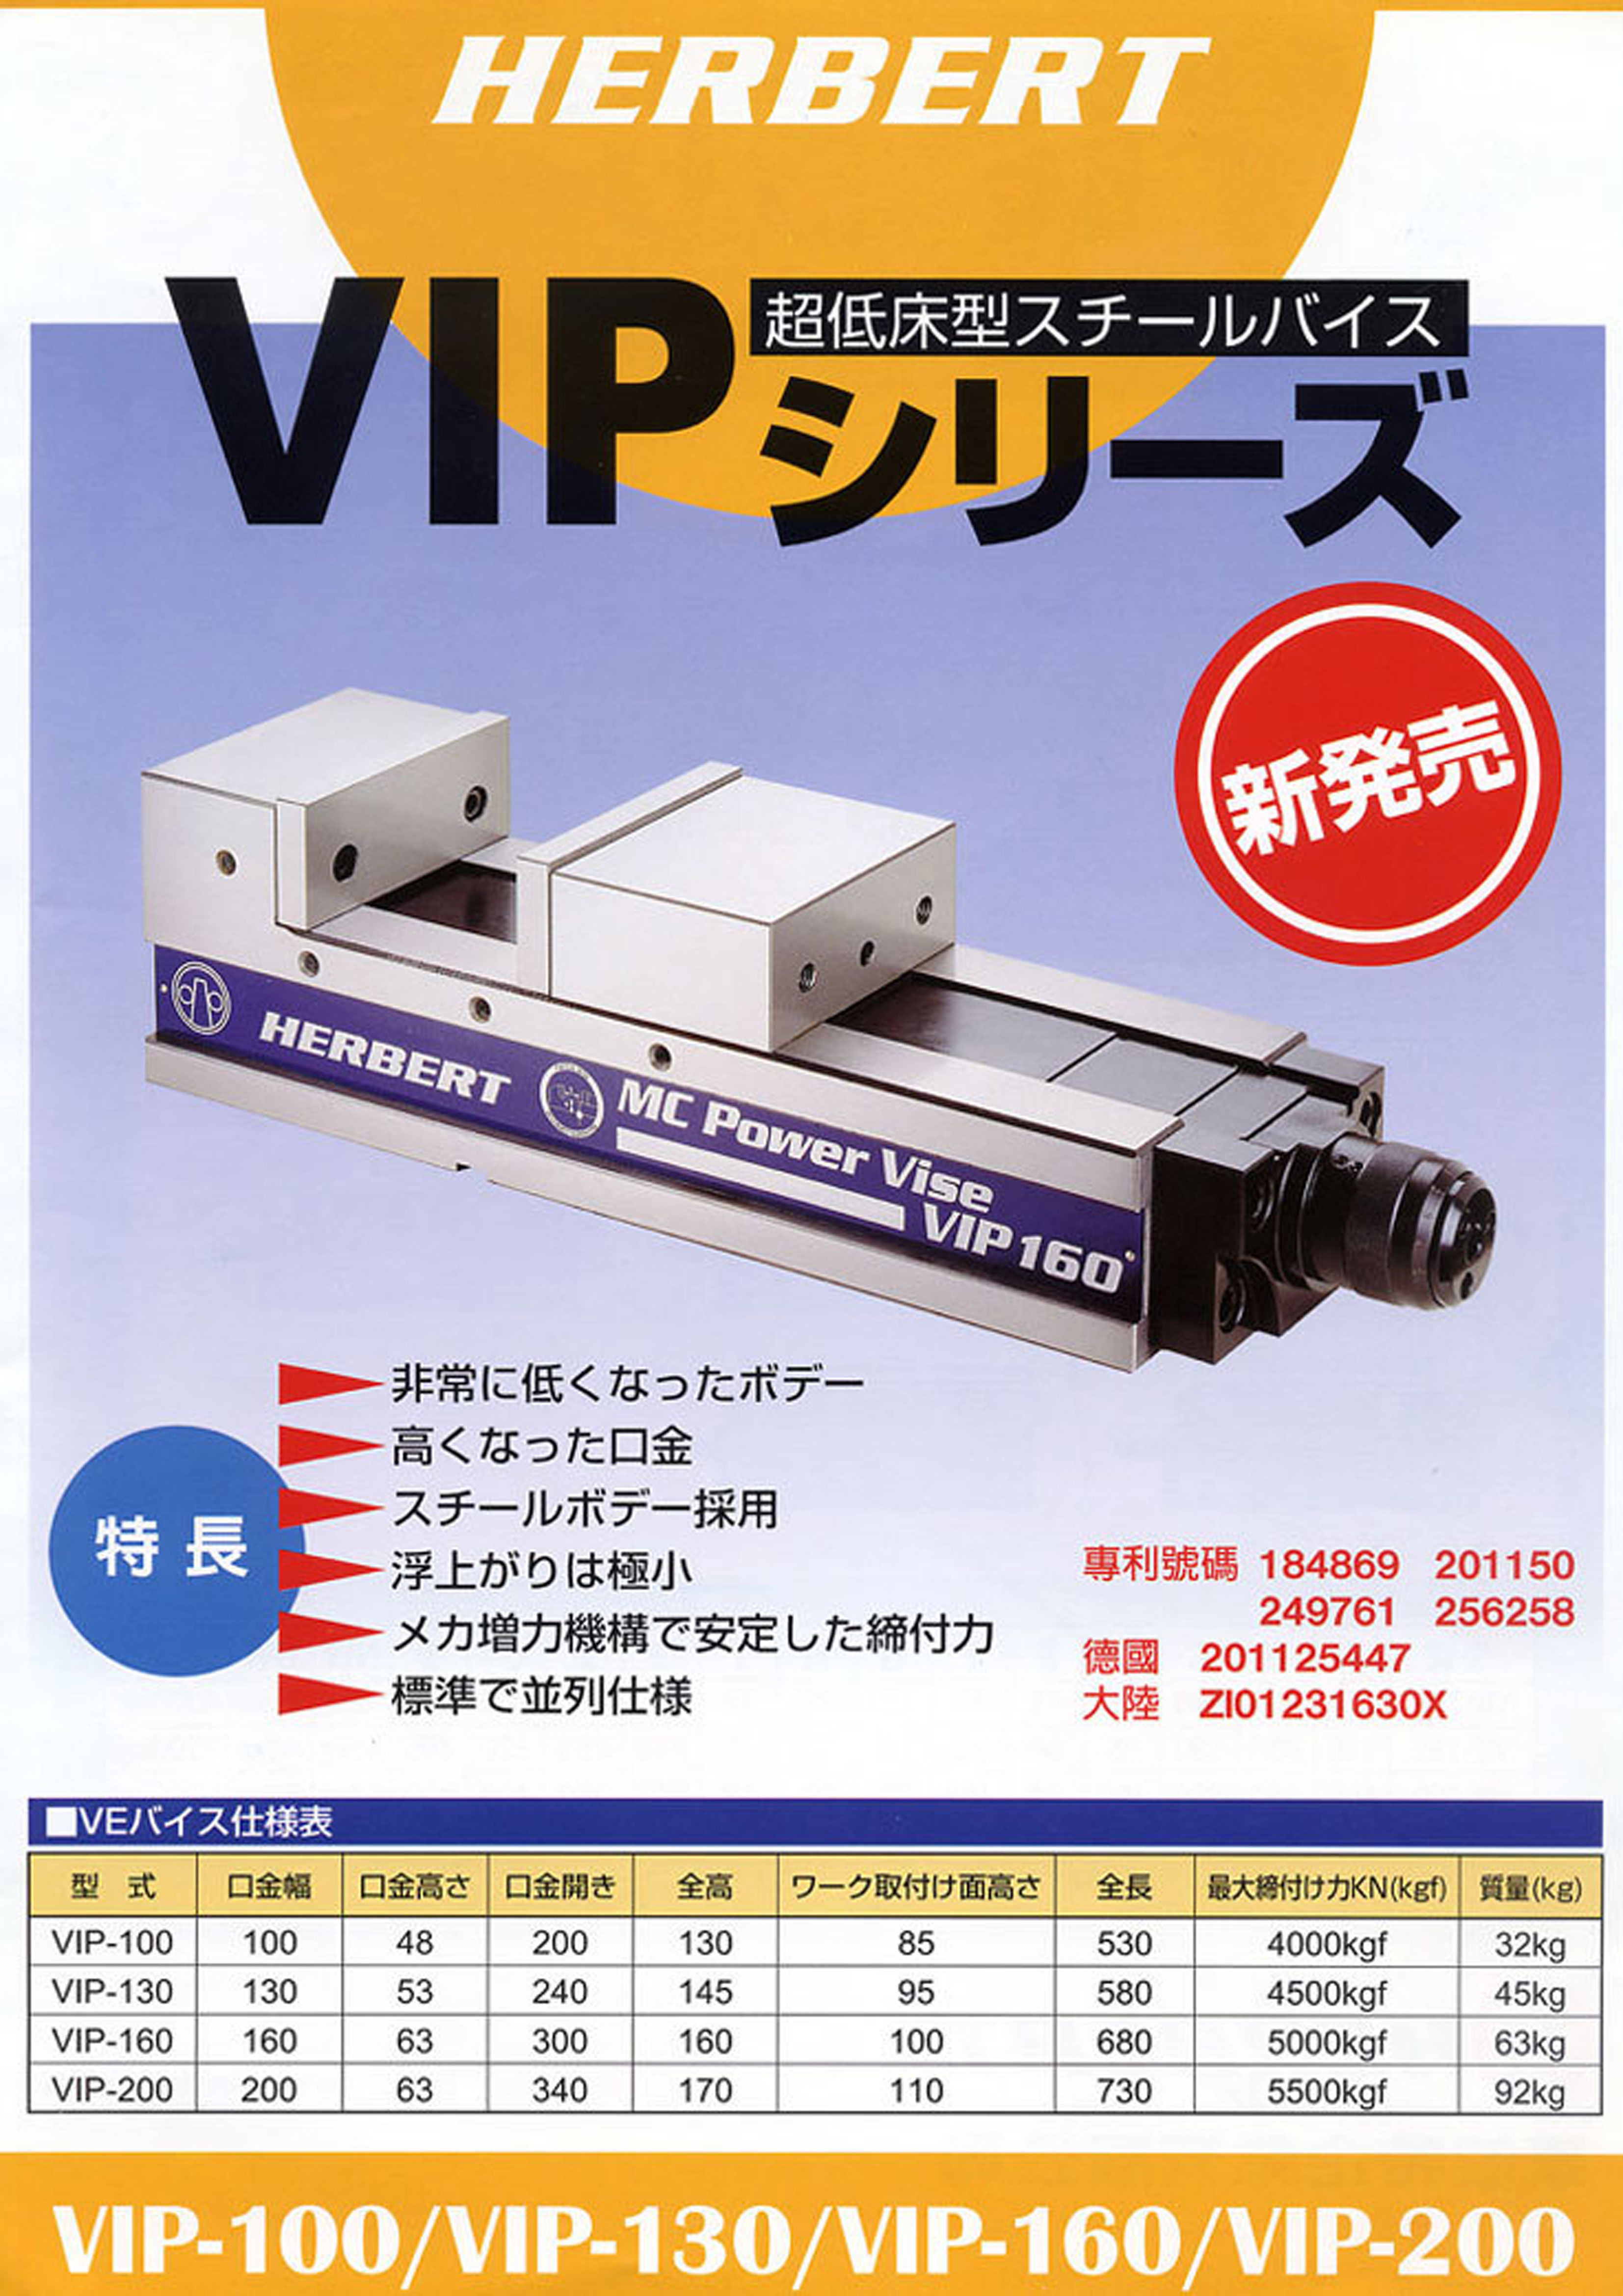 MC Precision Vice VIP Series (Japanese)